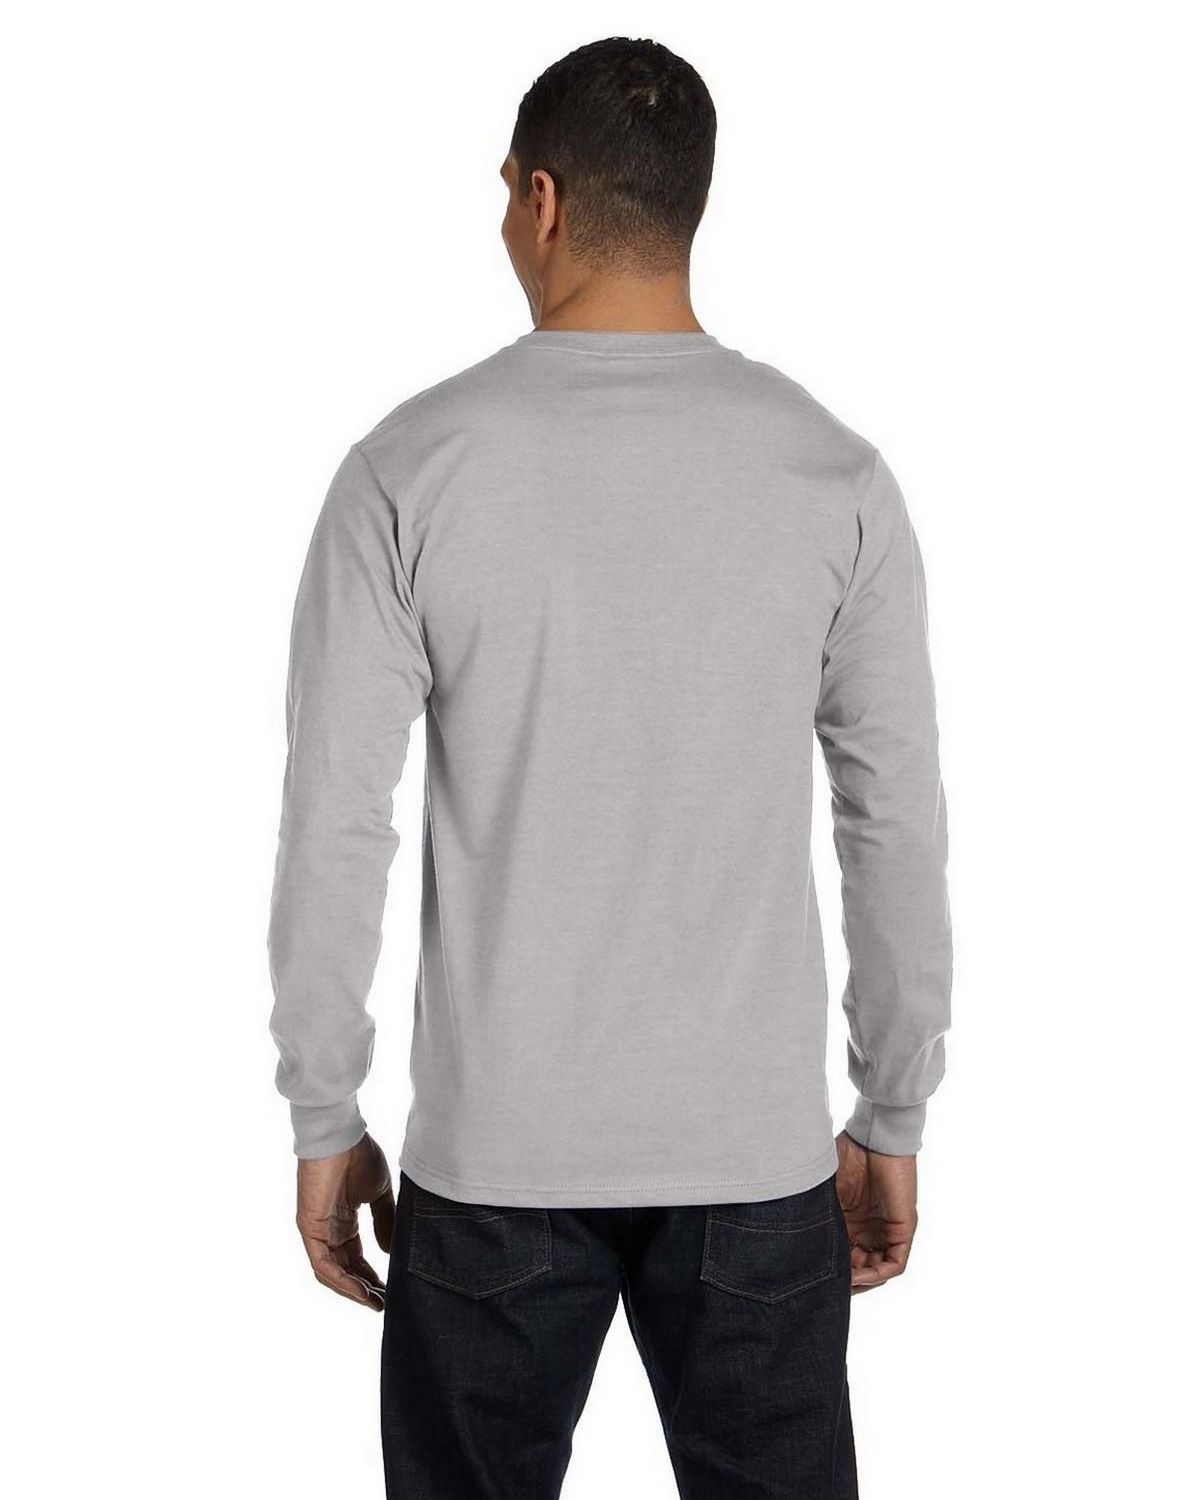 Hanes 5286 100% ComfortSoft Cotton Long Sleeve T Shirt - ApparelnBags.com